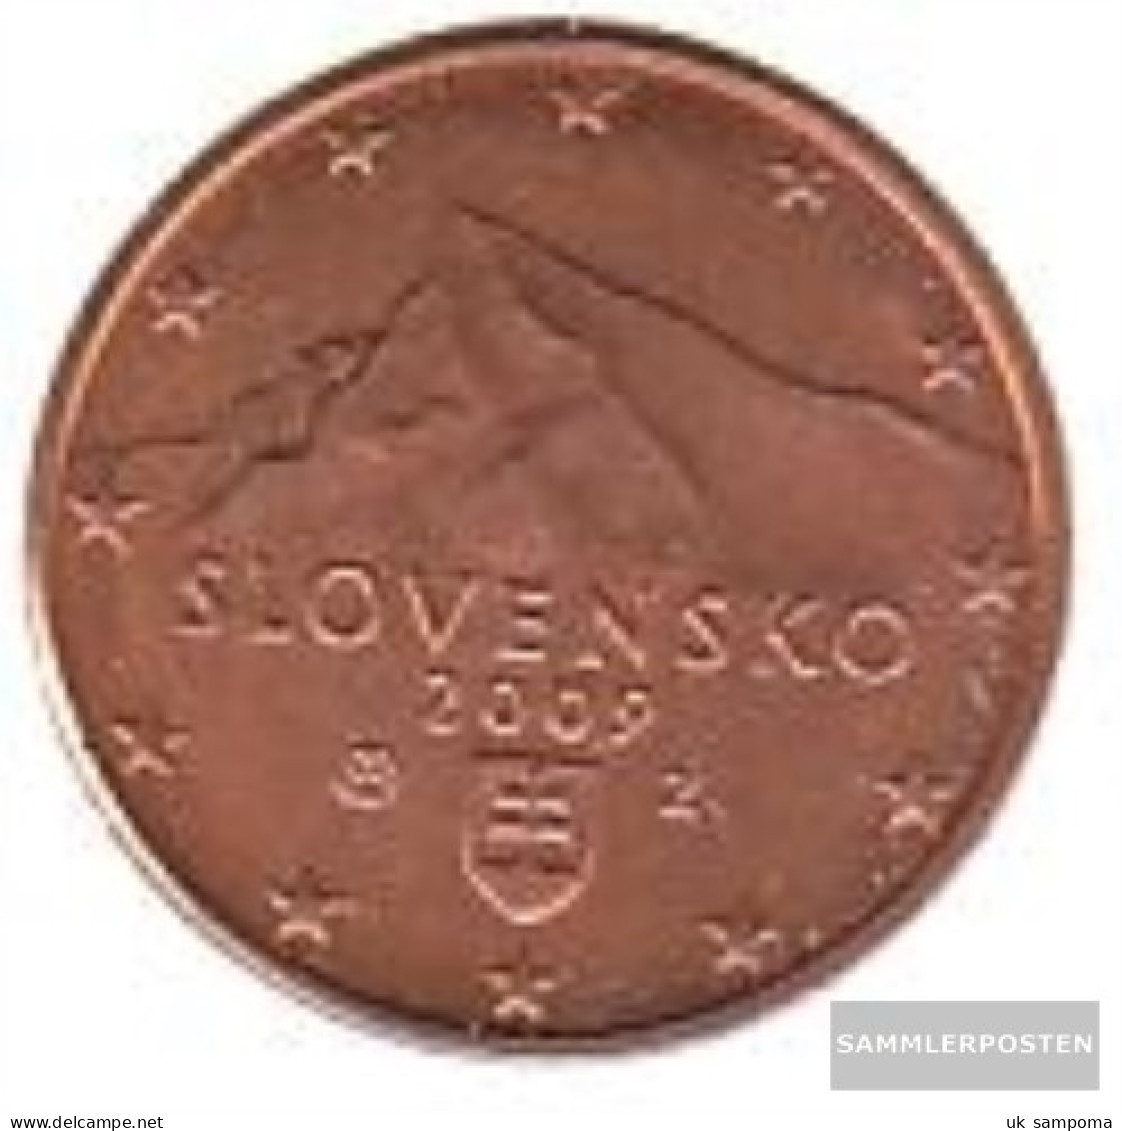 Slovakia Sk 1 2009 Stgl./unzirkuliert Stgl./unzirkuliert 2009 Kursmünze 1 Cent - Eslovaquia